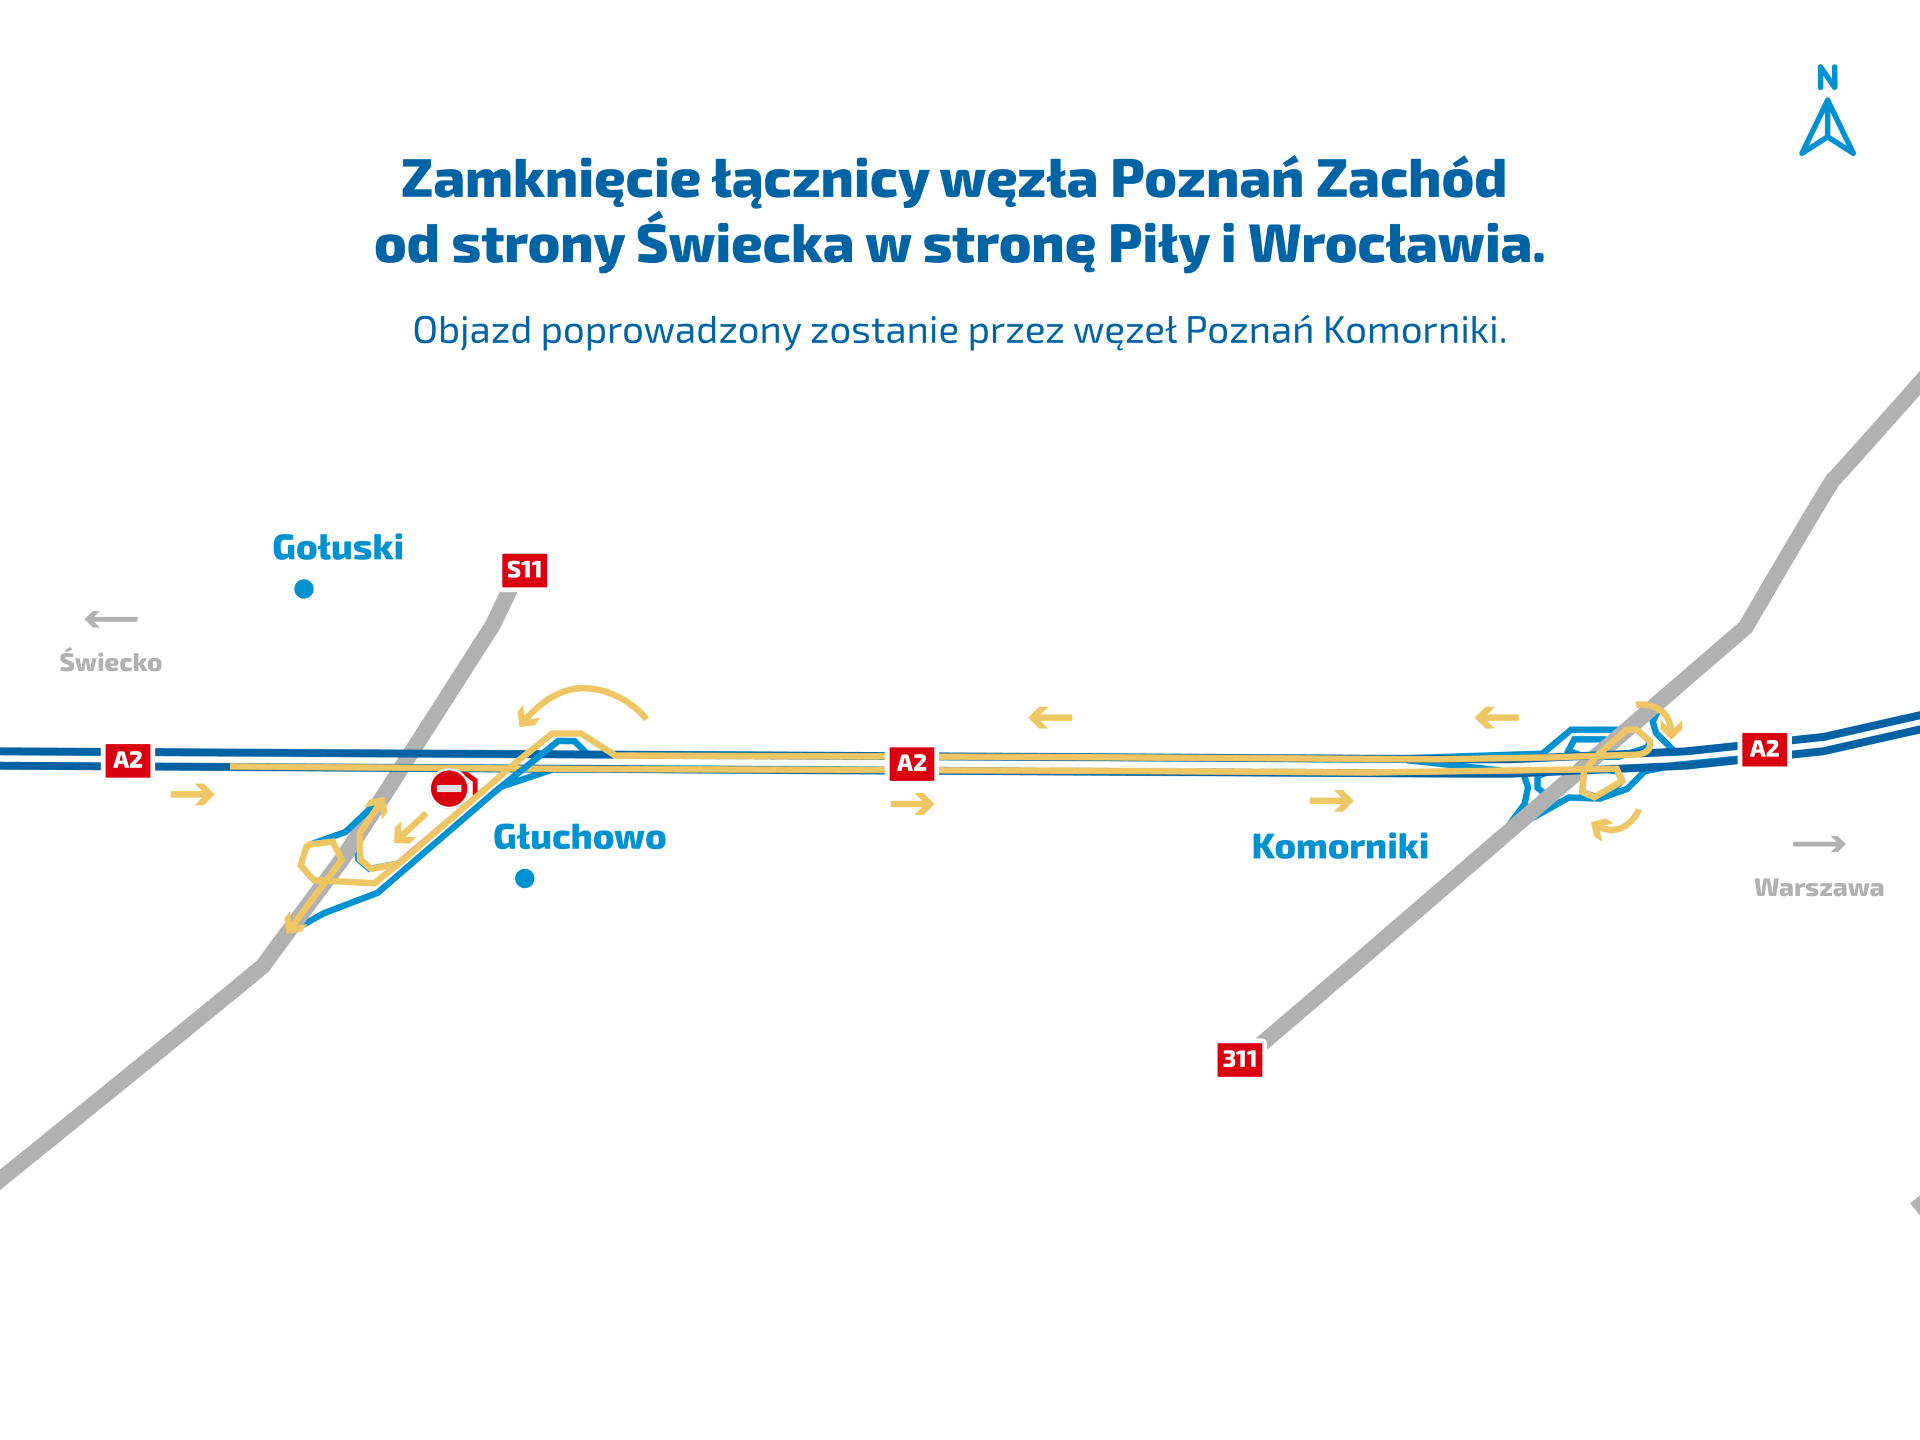 Pavement rehabilitation around the Gołuski Toll Plaza - slip road closed at the Poznań Zachód (West) Interchange